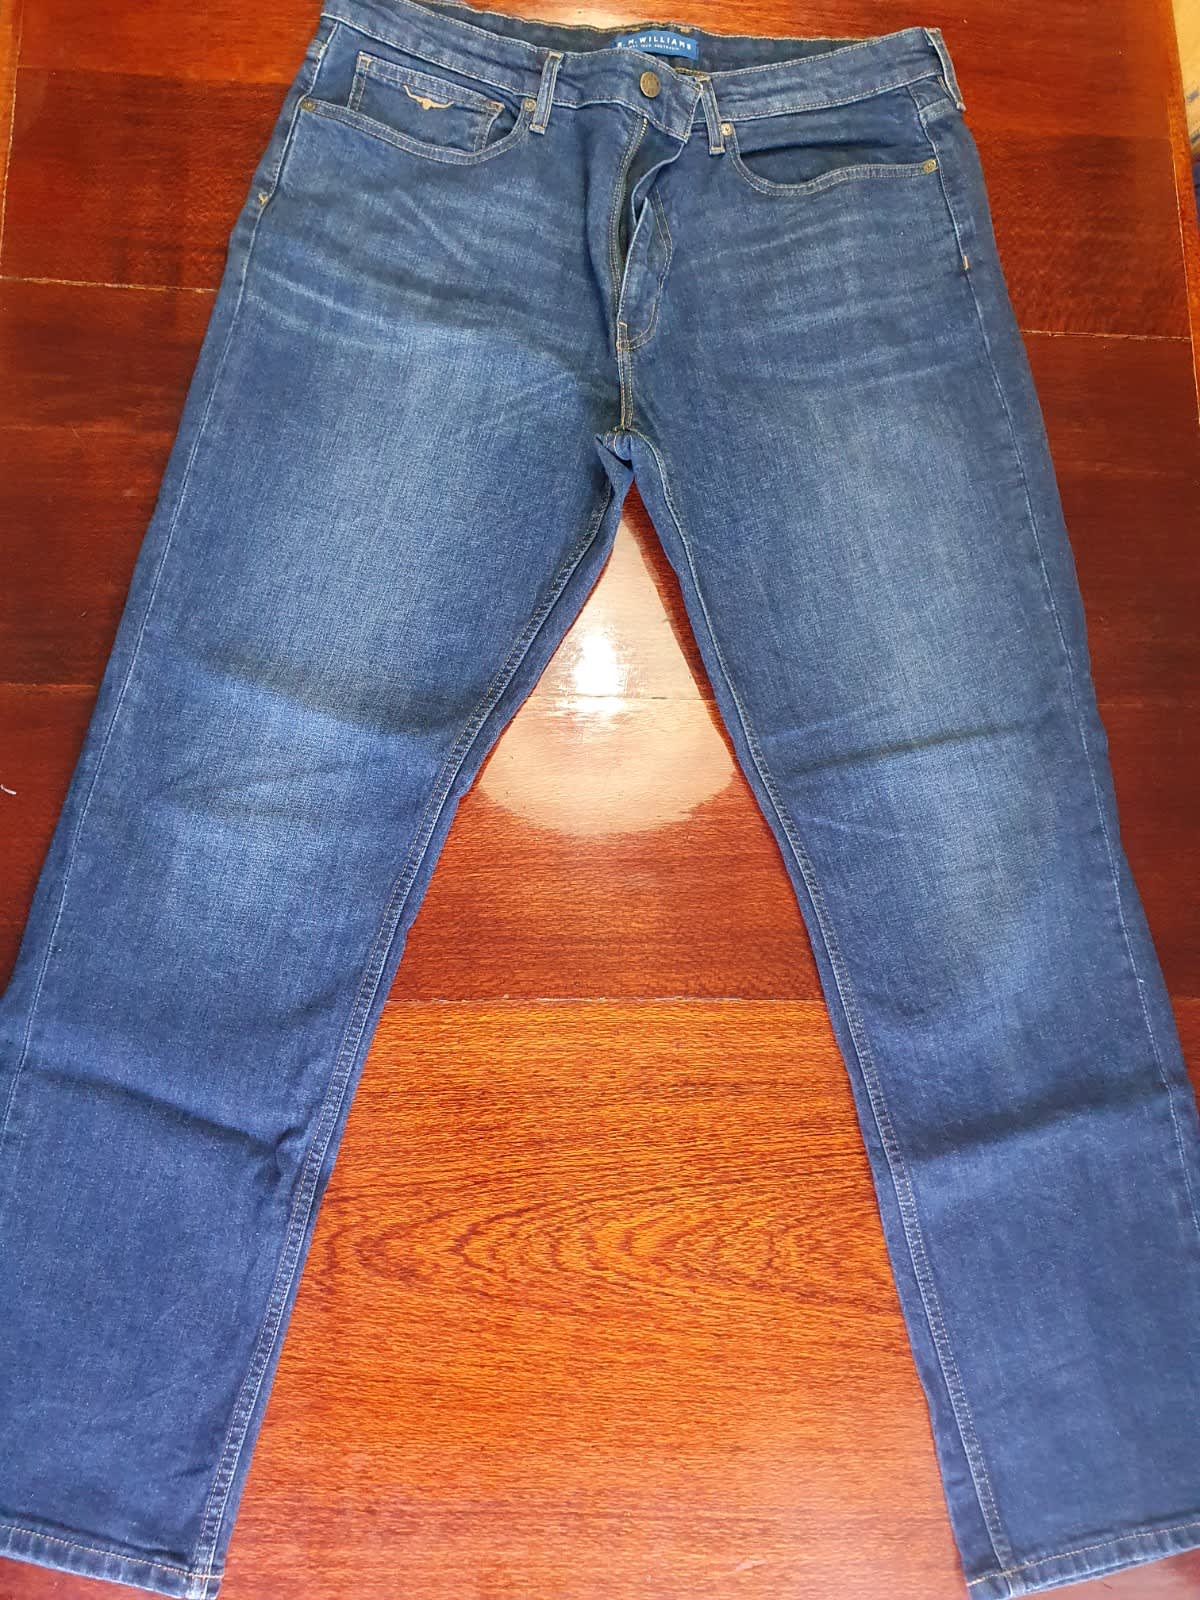 VTG RM Williams Men's Jeans Medium Wash Blue • 37x28